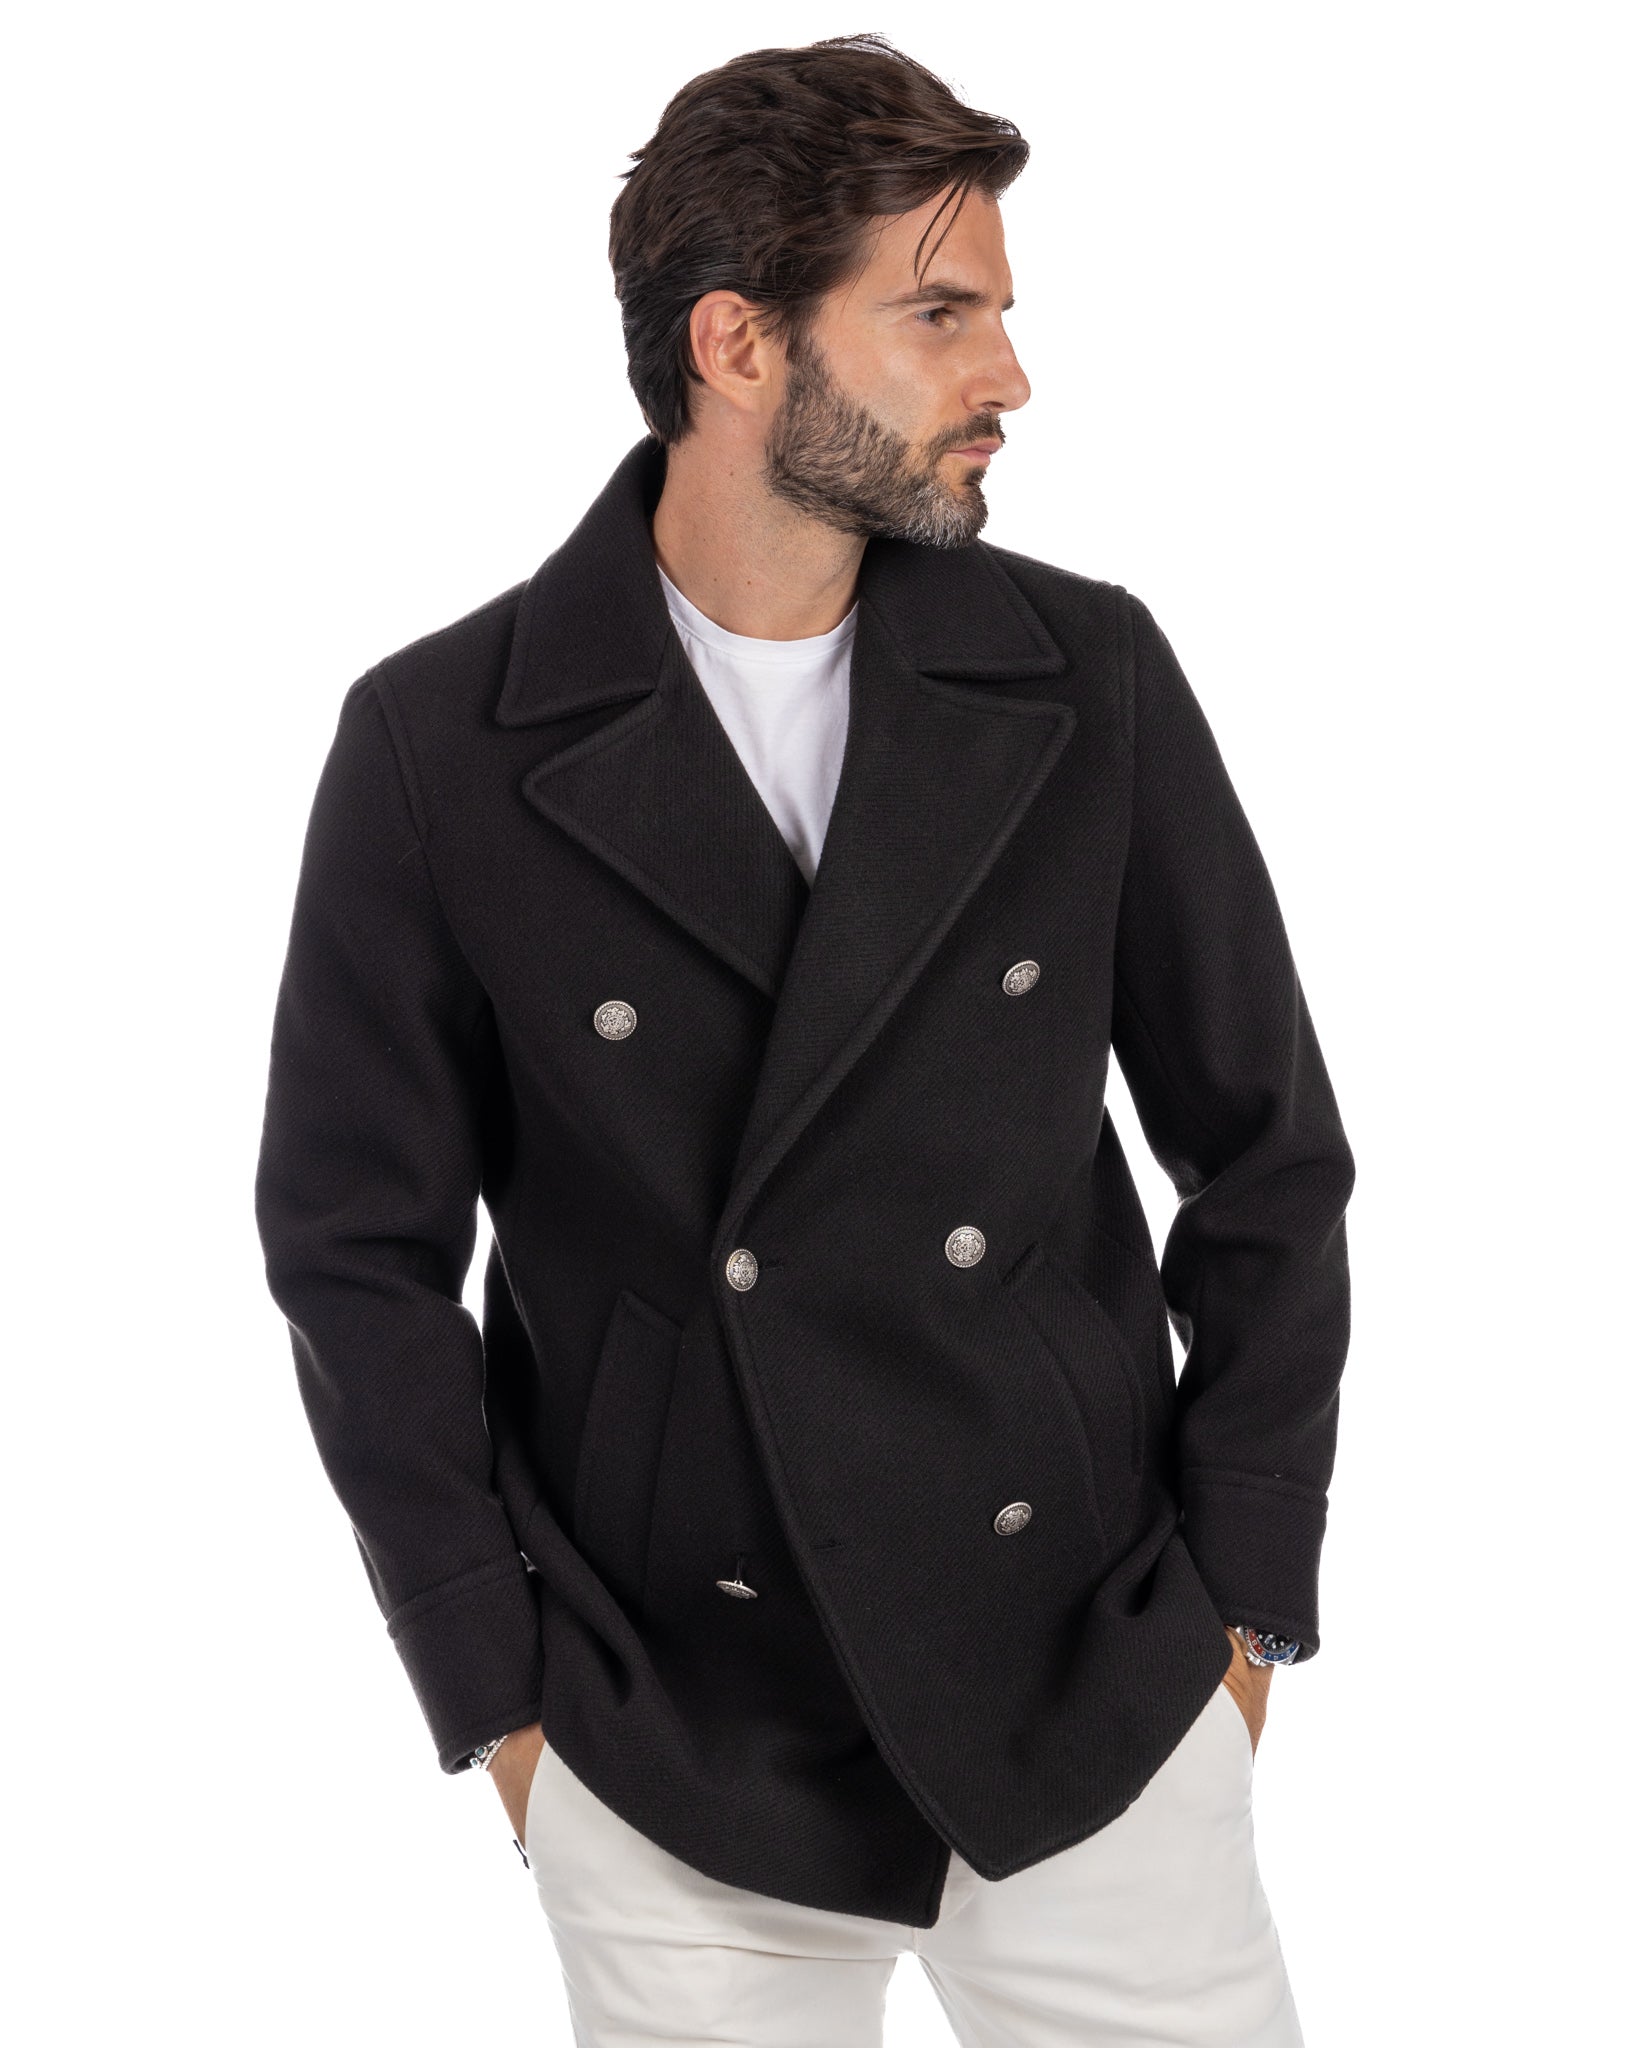 David - black 3/4 coat